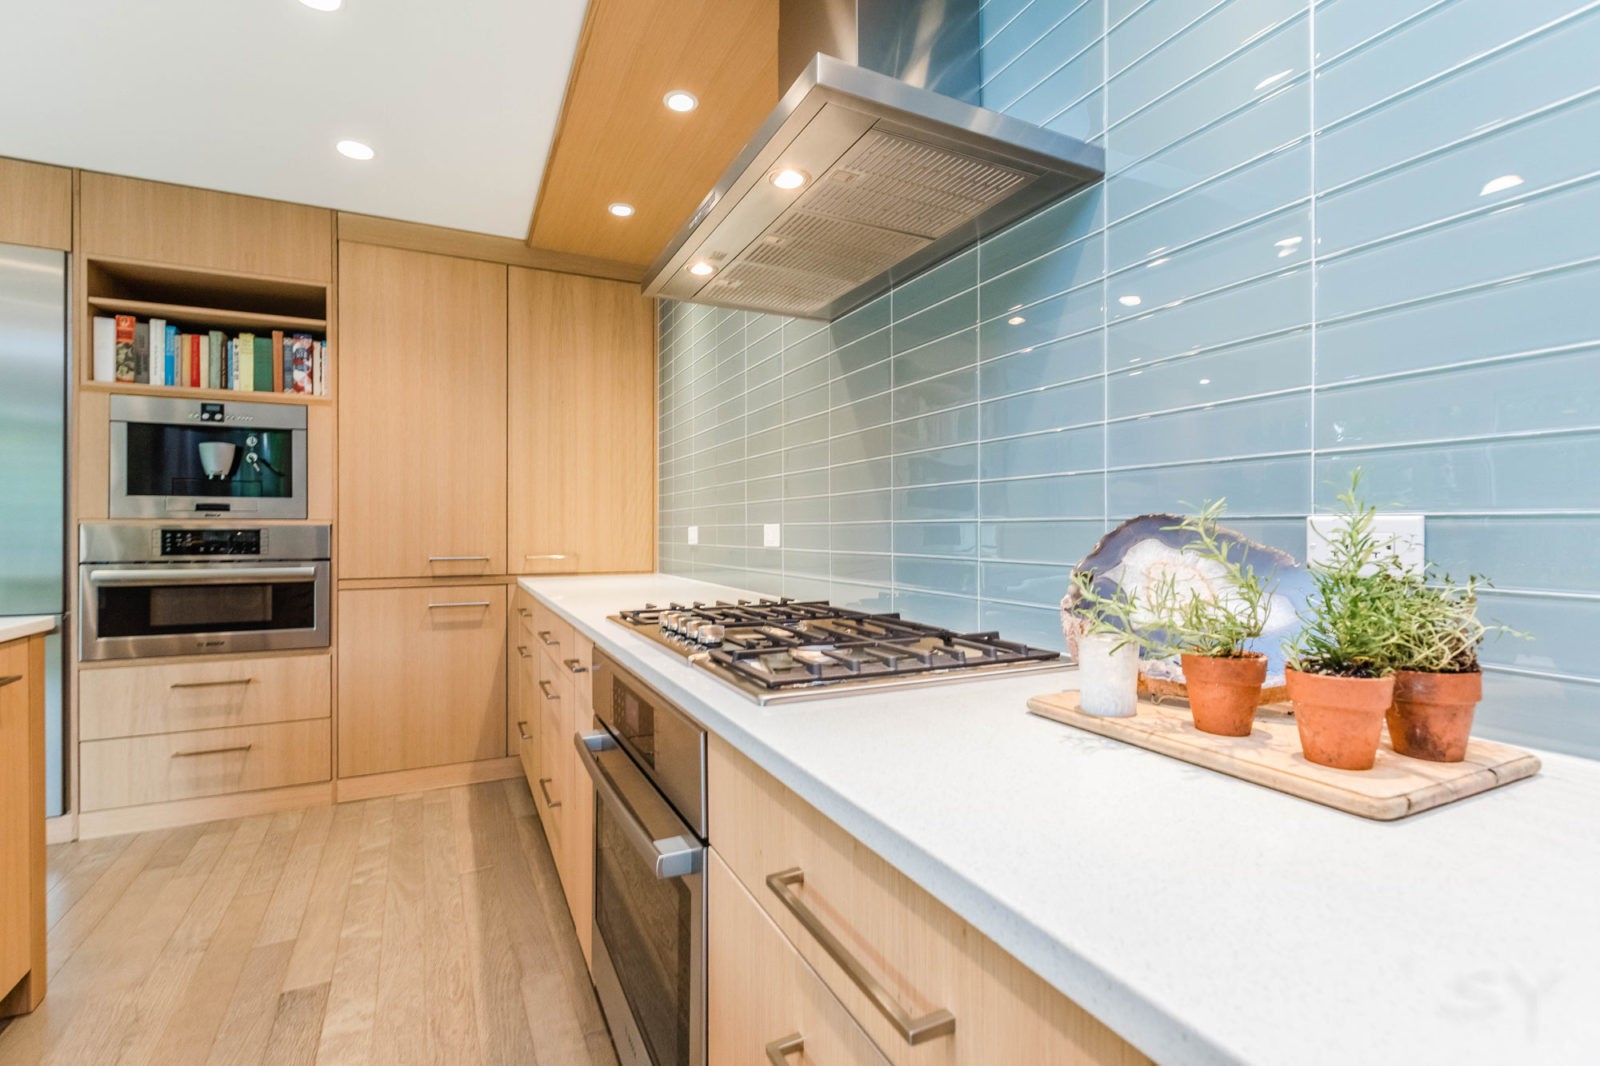 Kitchen with island, light wood cabinets & drawers, silver appliances, & light blue tile backsplash